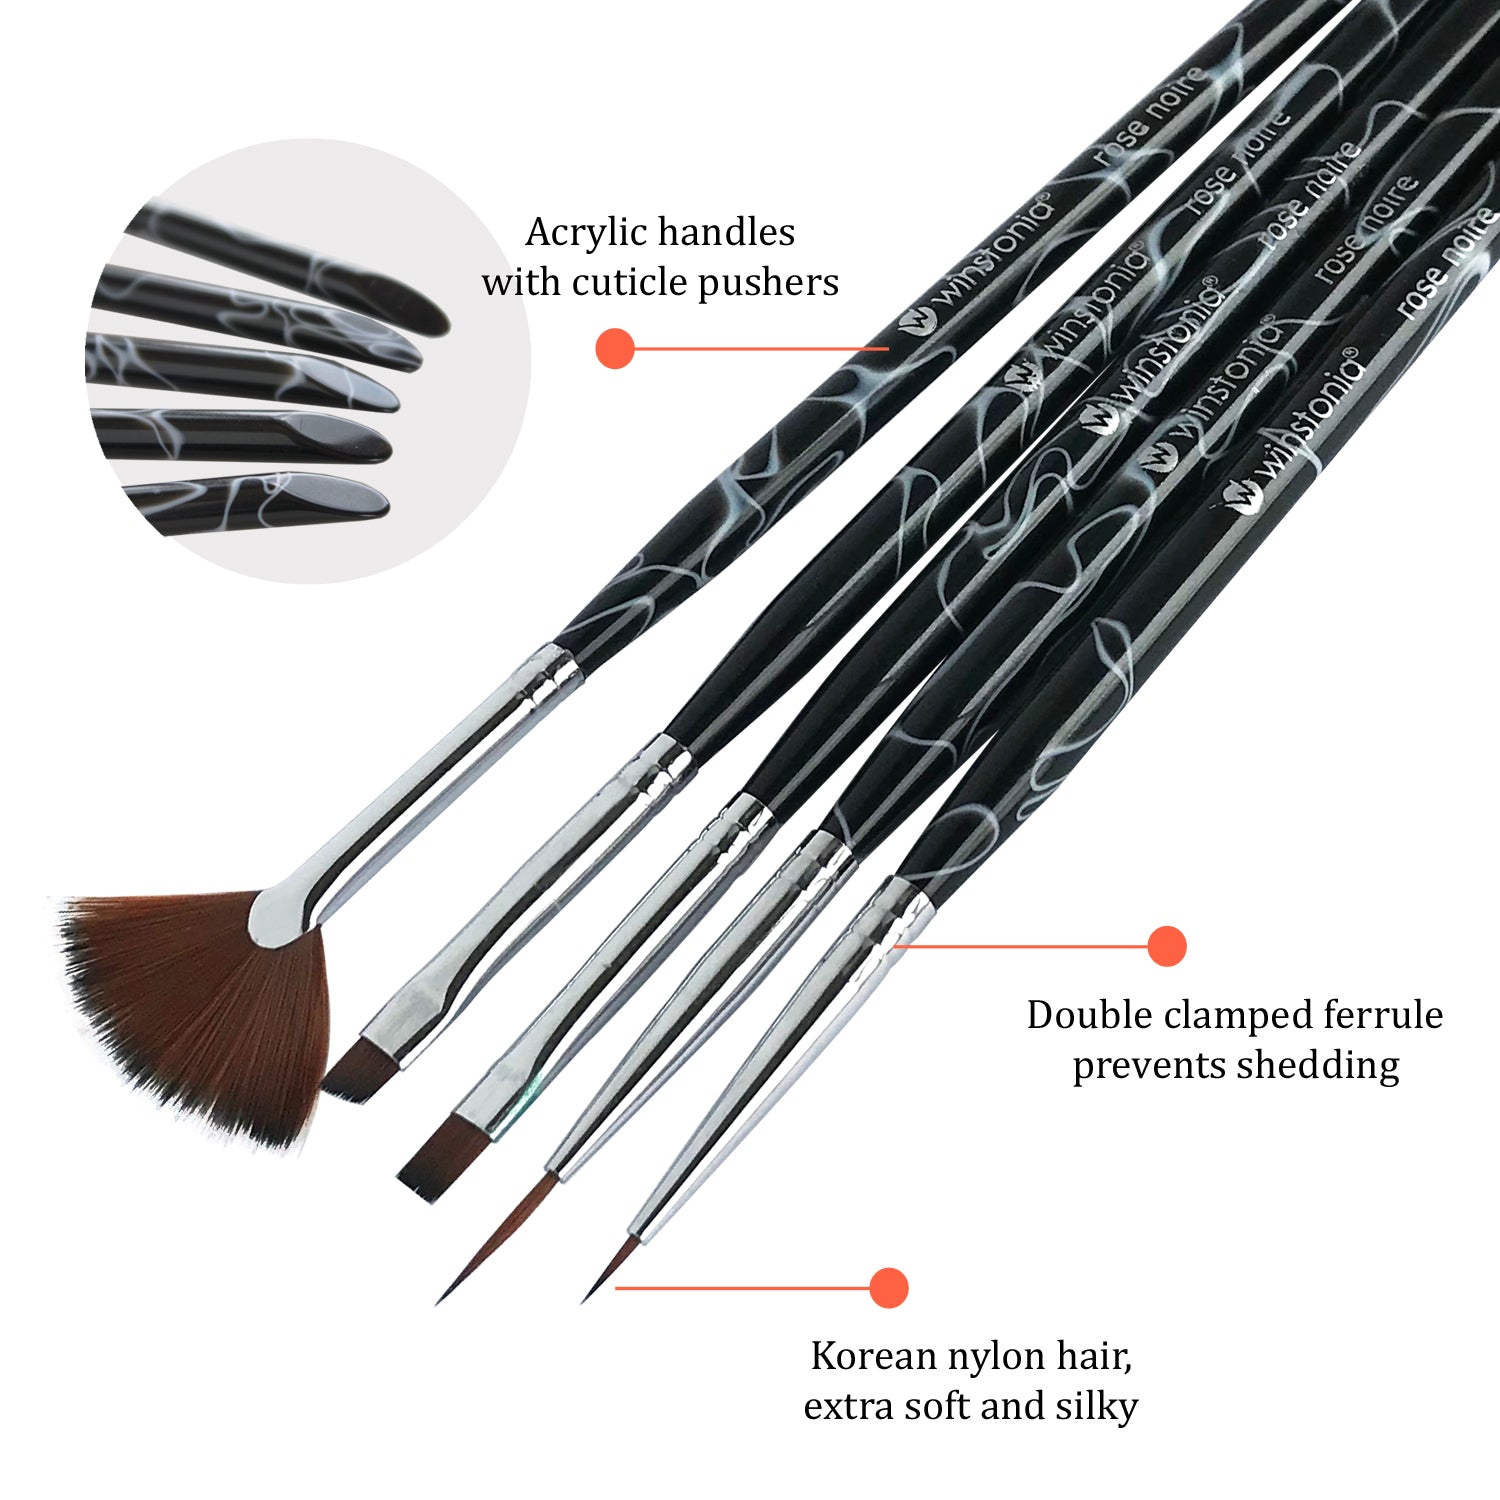 5 Pcs Nail Art Brushes - Detailer, Liner, Flat, Angled and Fan Brush Set | ROSE NOIRE